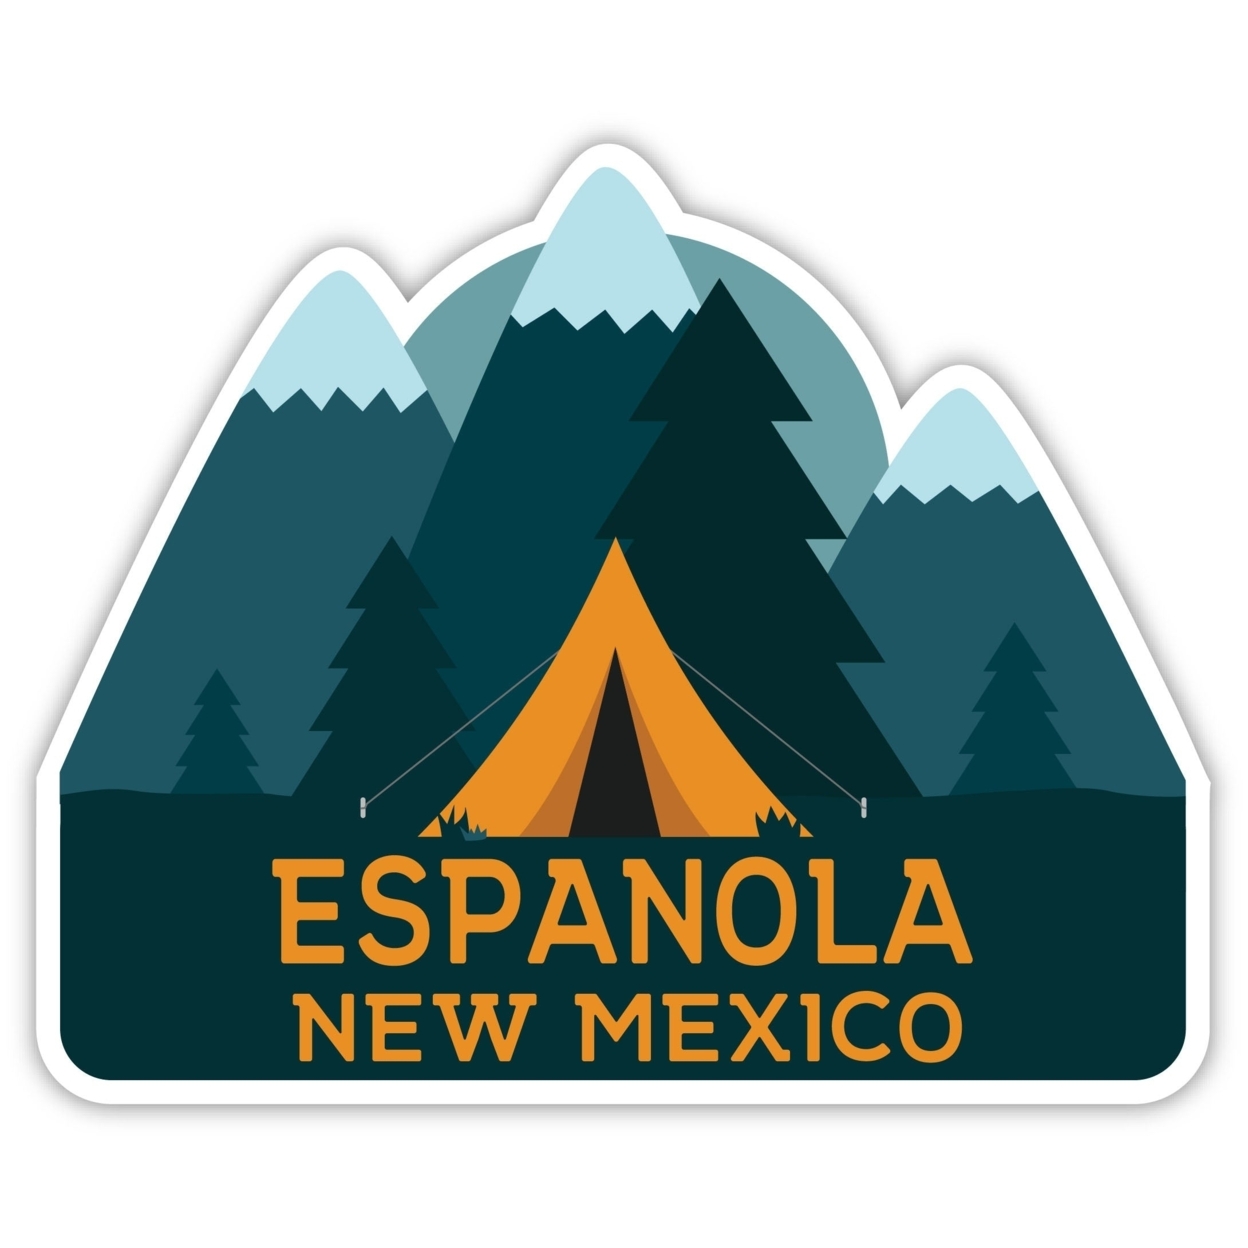 Espanola New Mexico Souvenir Decorative Stickers (Choose Theme And Size) - 4-Pack, 6-Inch, Tent